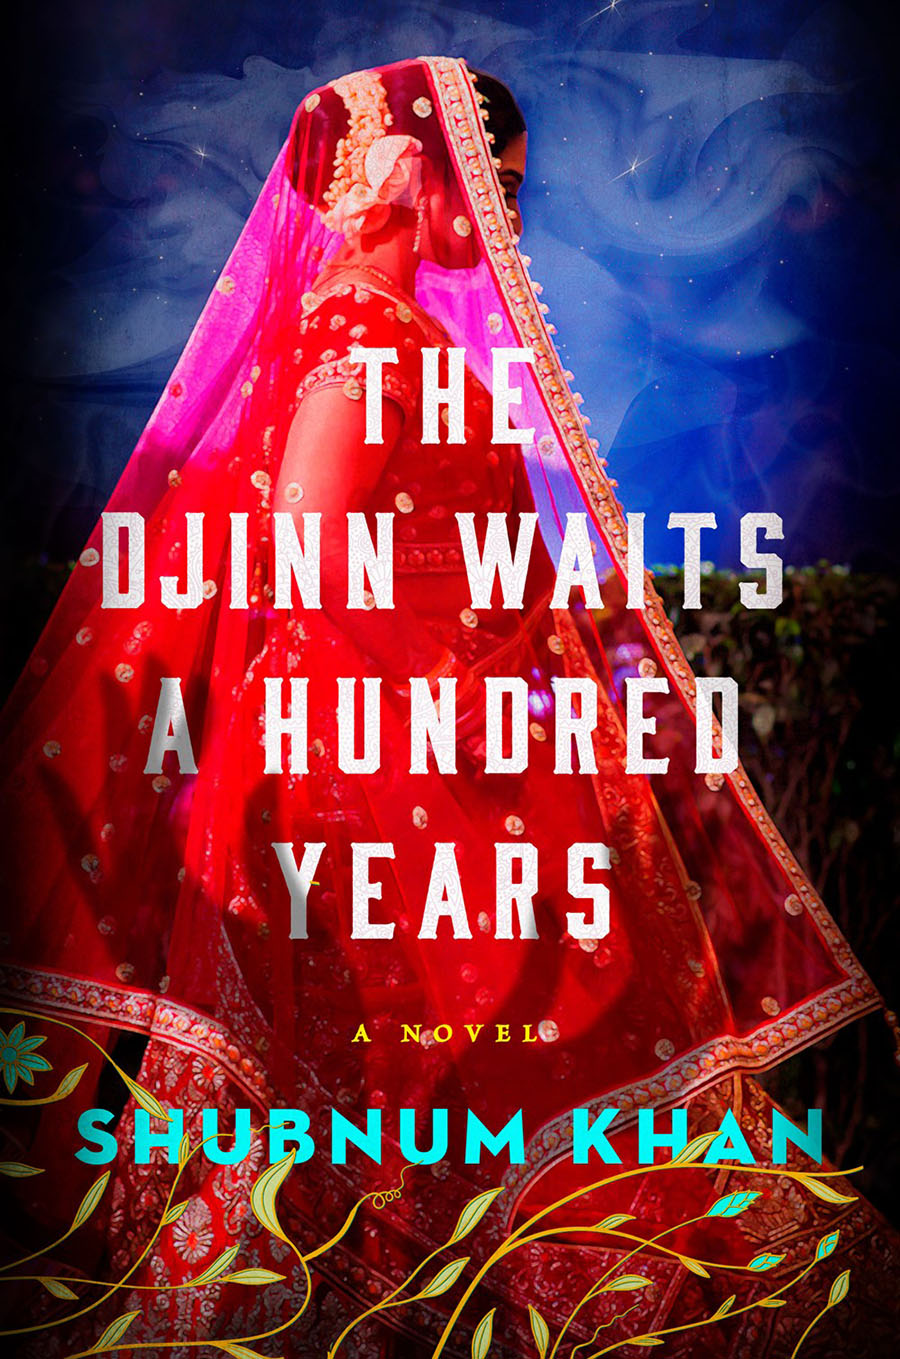 The-Djinn-Waits-A-Hundred-Years-book-cover